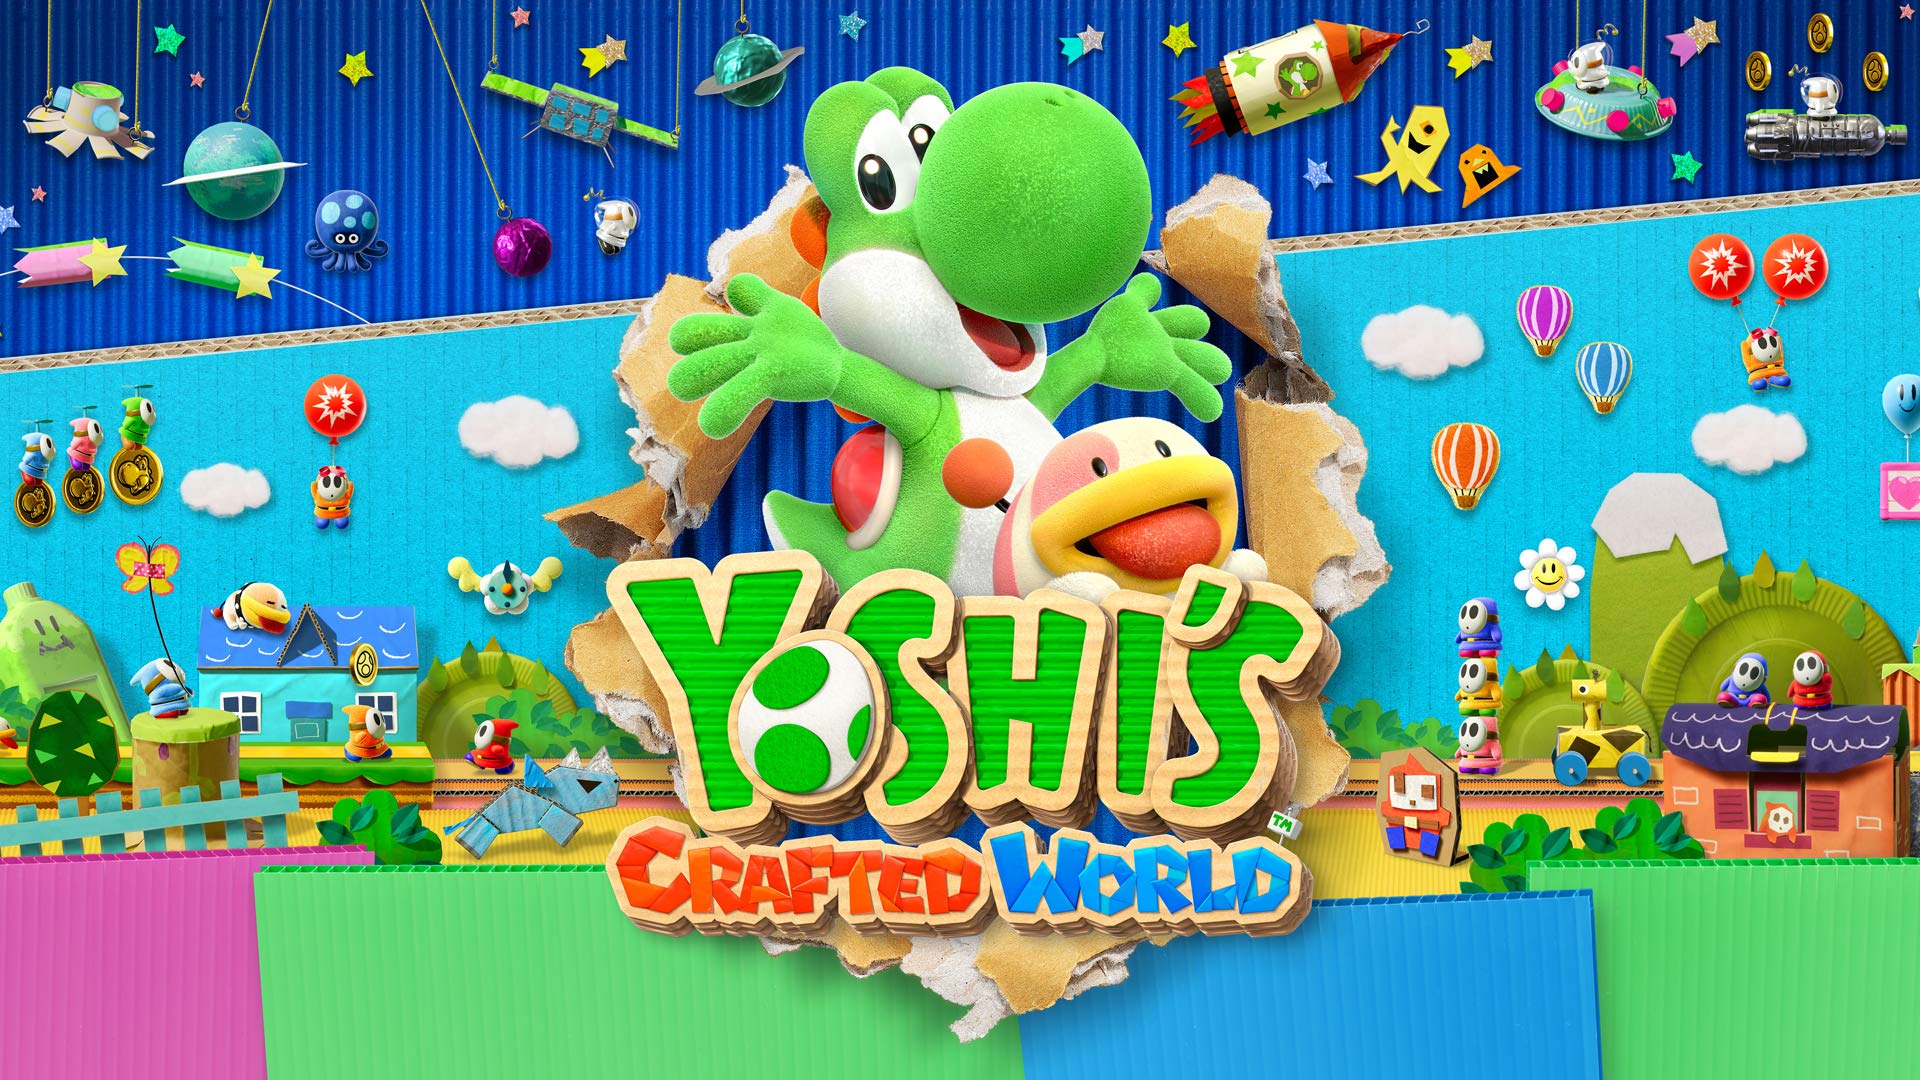 Yoshi's Crafted World - Nintendo Switch [Digital Code]